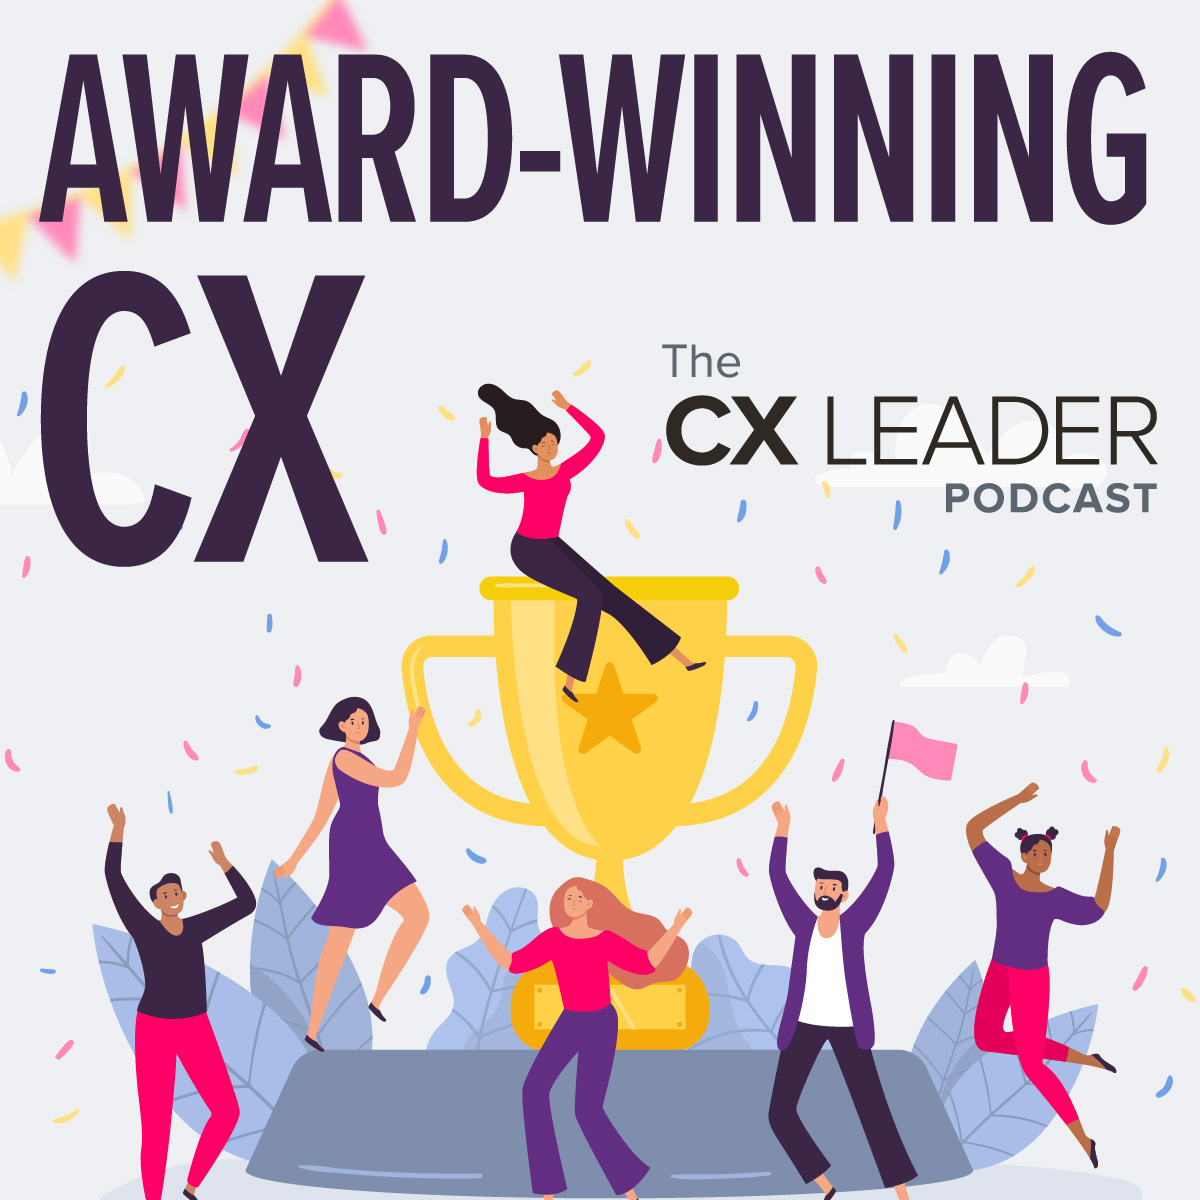 Award-Winning CX